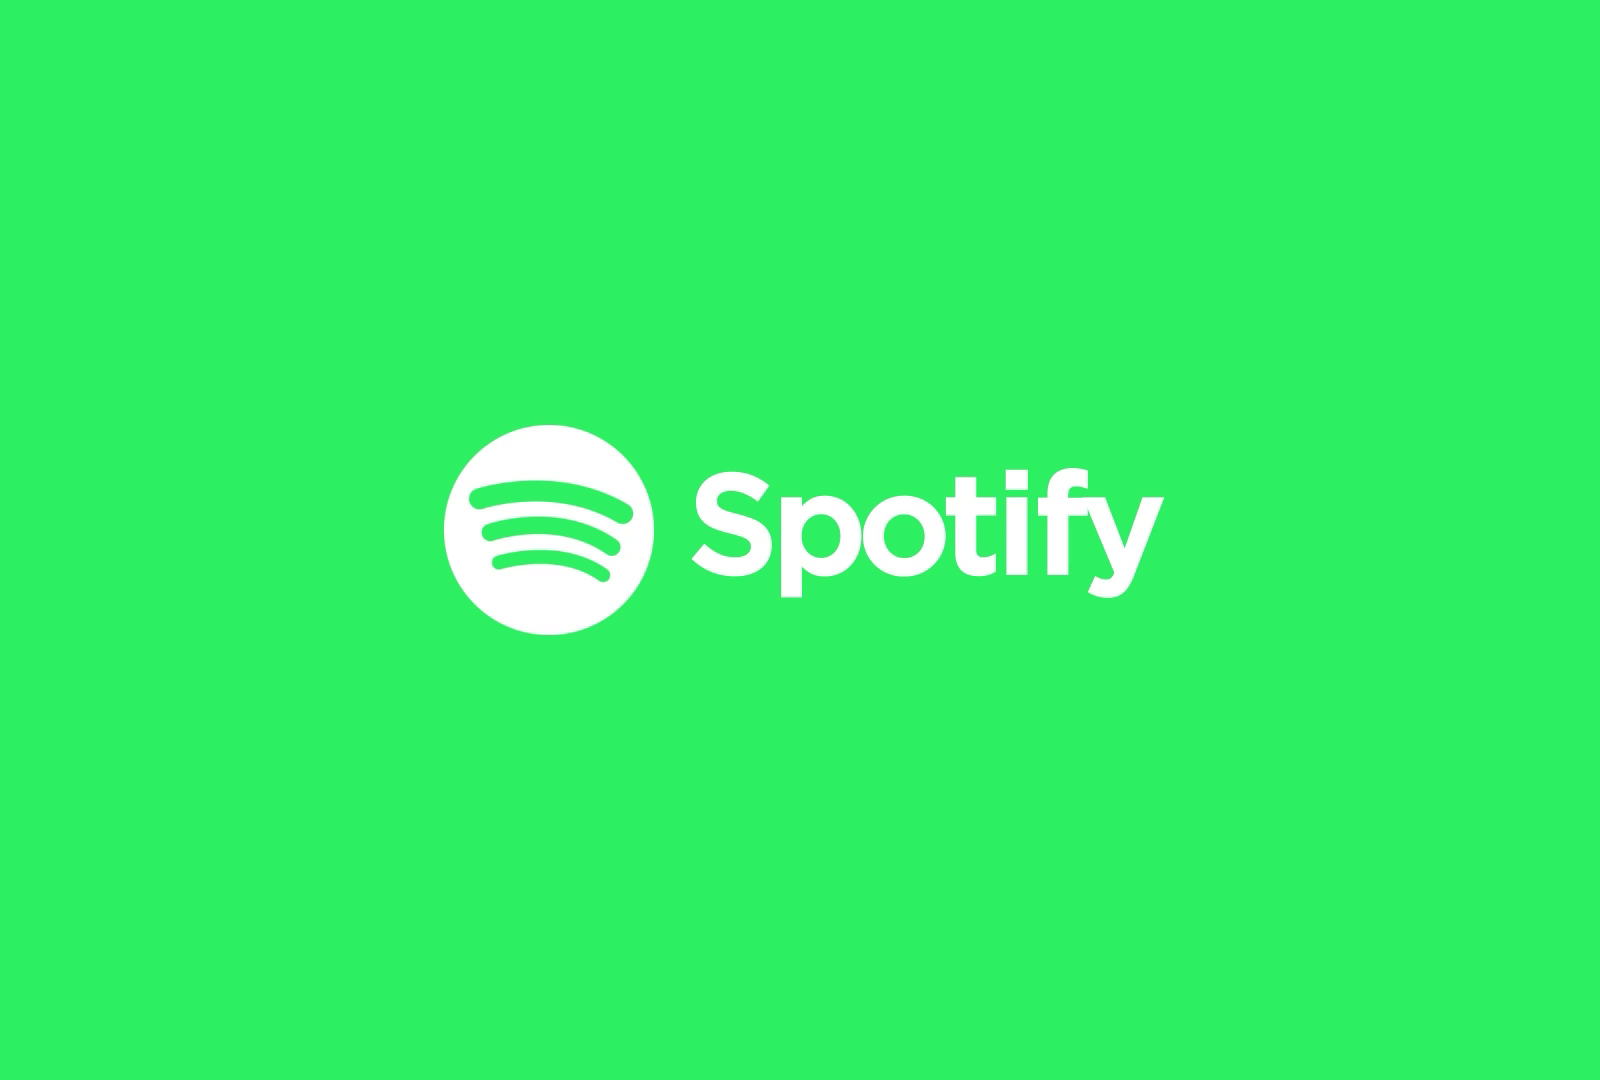 Spotify Logo Animation by Genadi on Dribbble